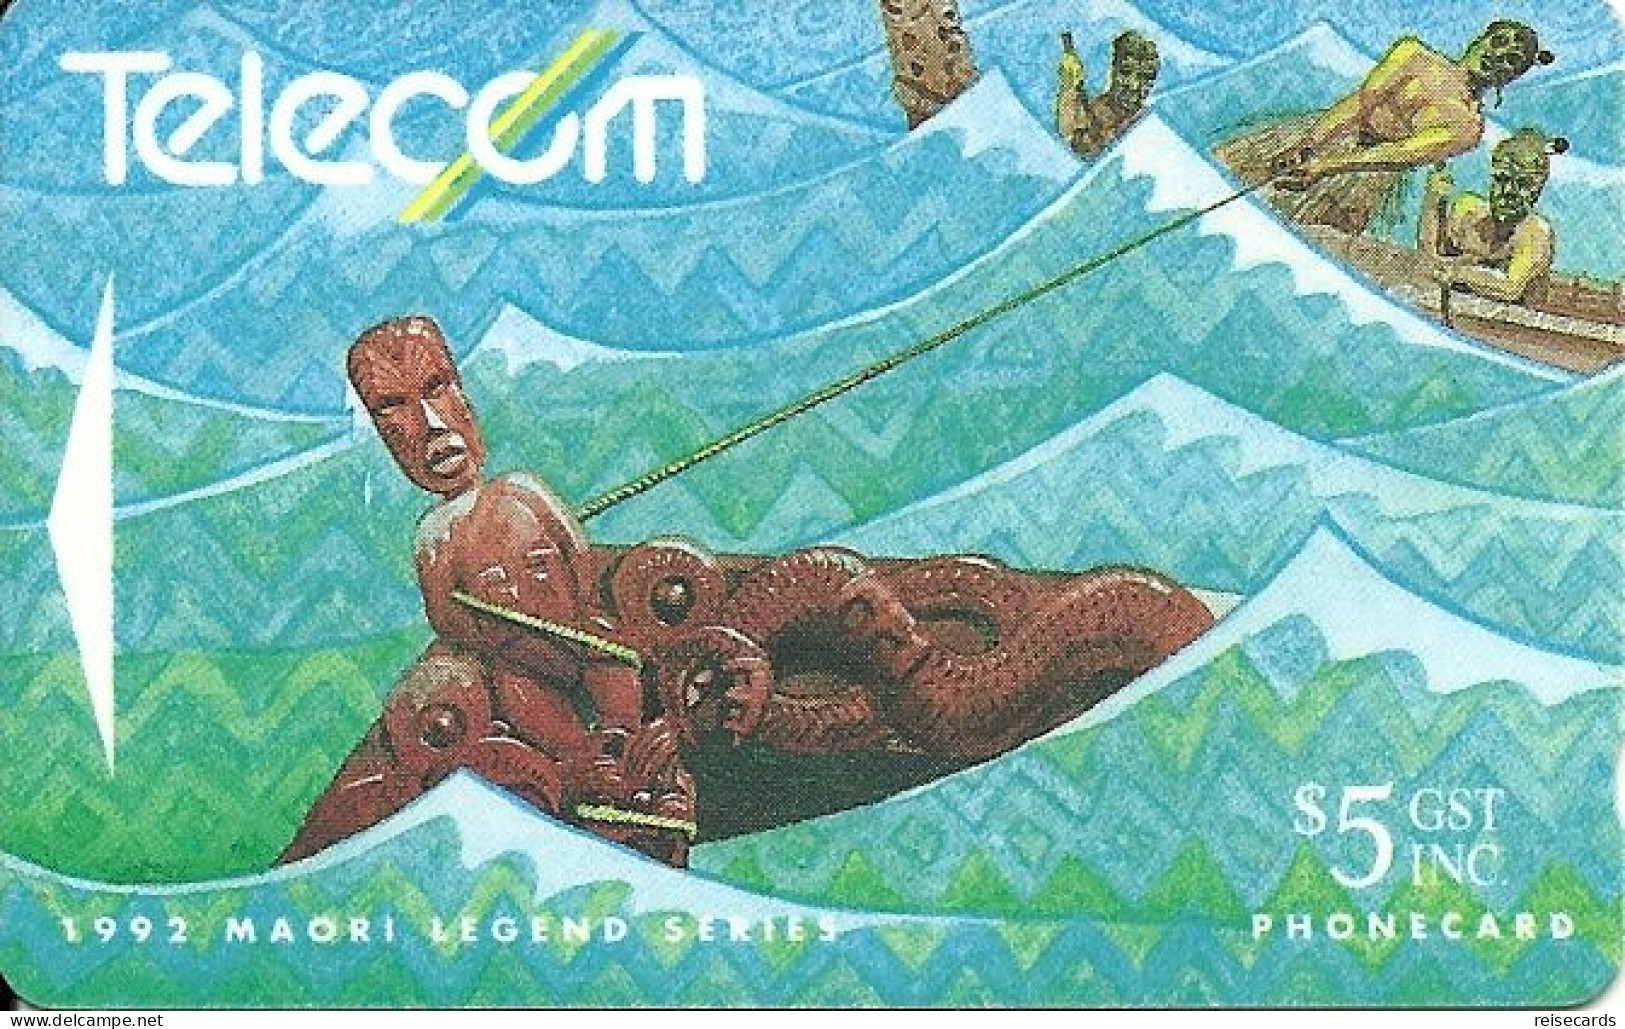 New Zealand: Telecom - 1992 Maori Legend , Maui Fishes Up The North Island - Neuseeland